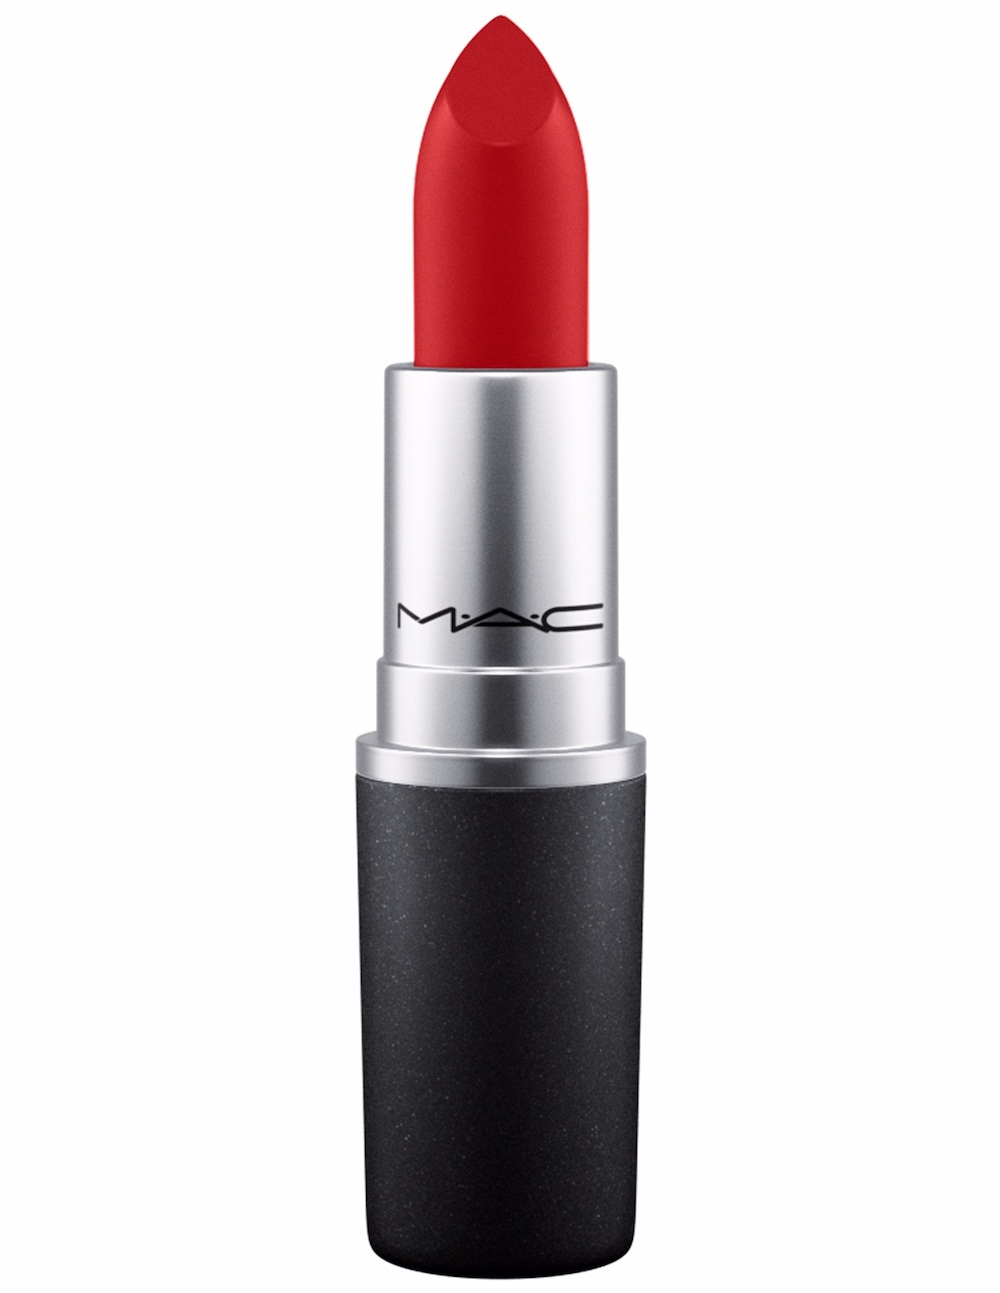 BettyBoop-lipstick-MAC.jpg